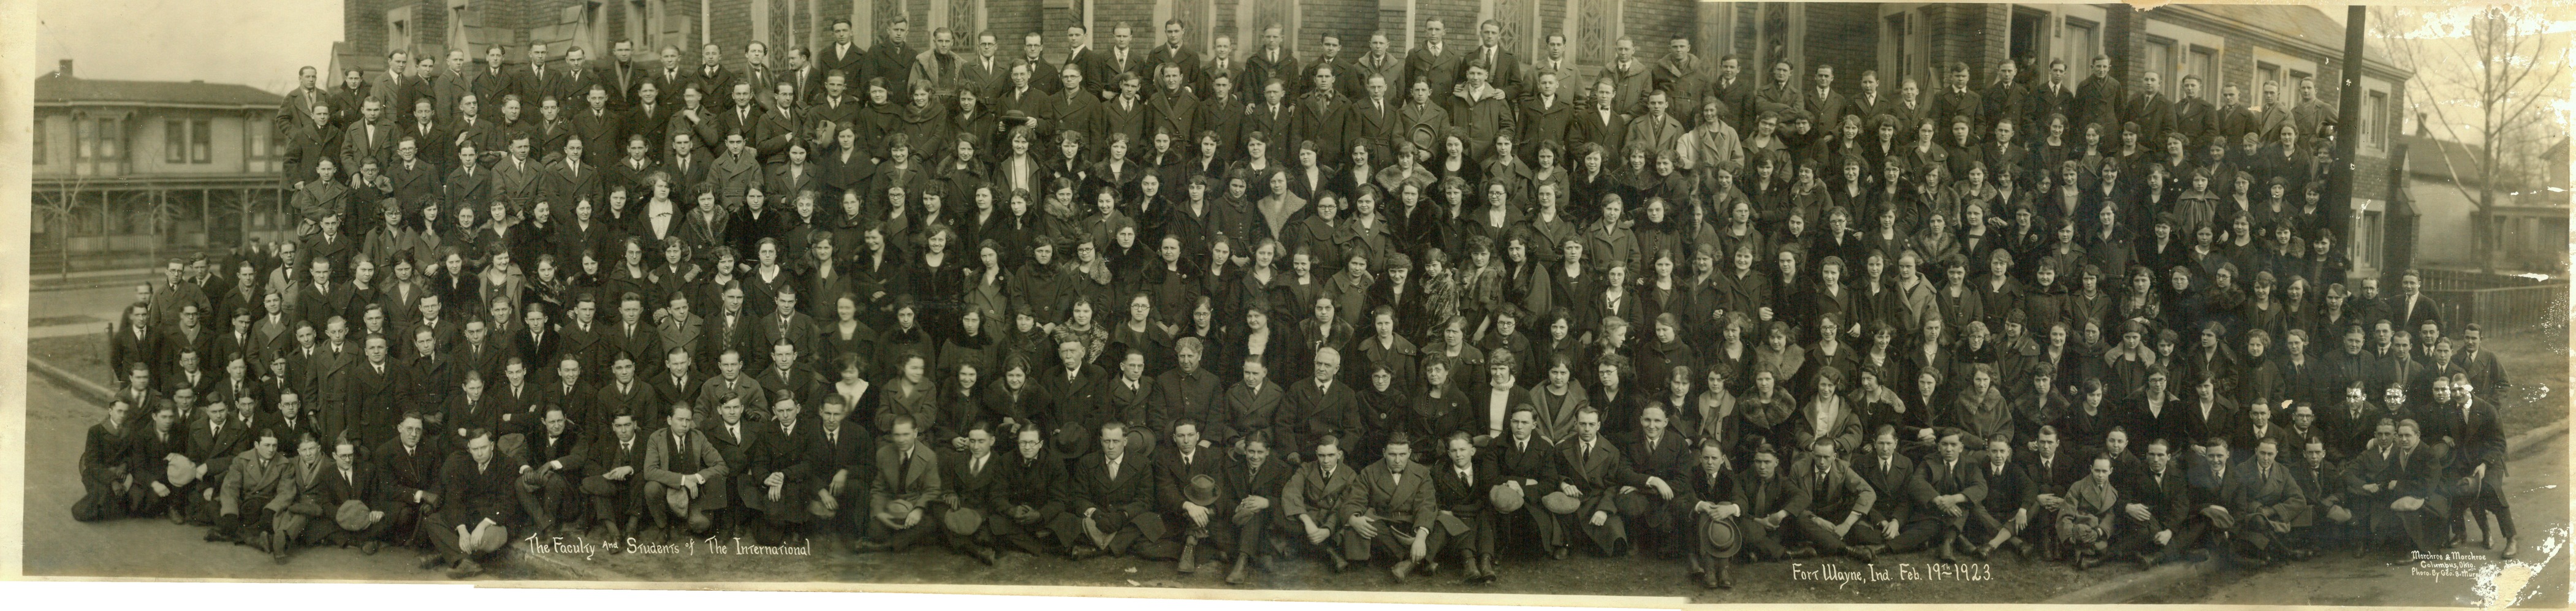 International Business College, Fort Wayne 1923